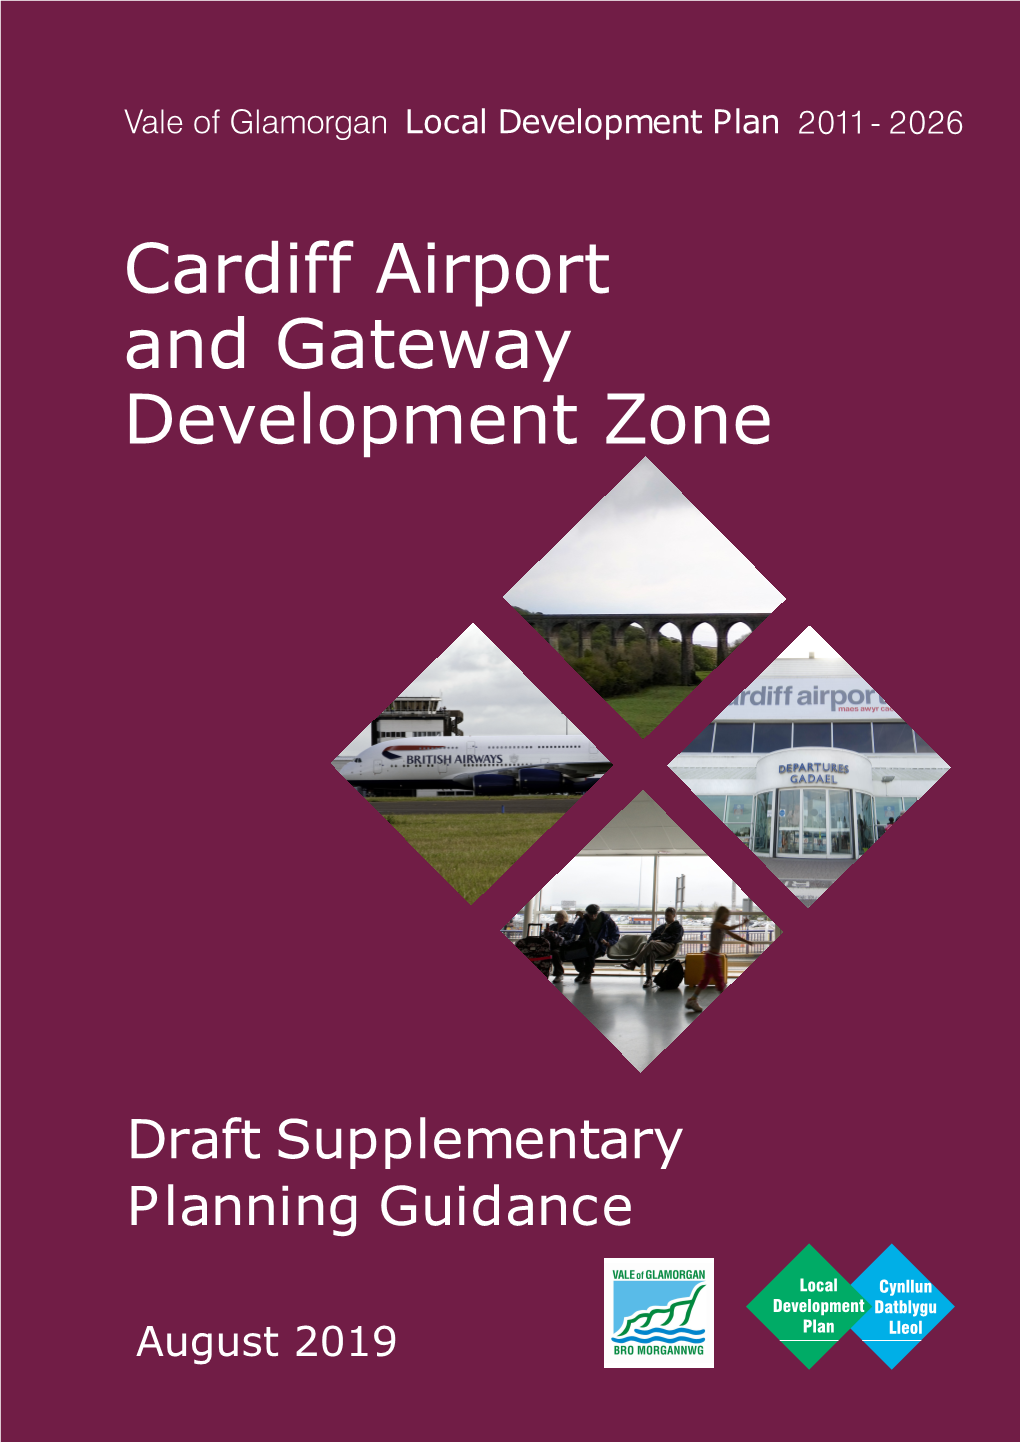 Consultation Draft Cardiff Airport and Gateway Development Zone